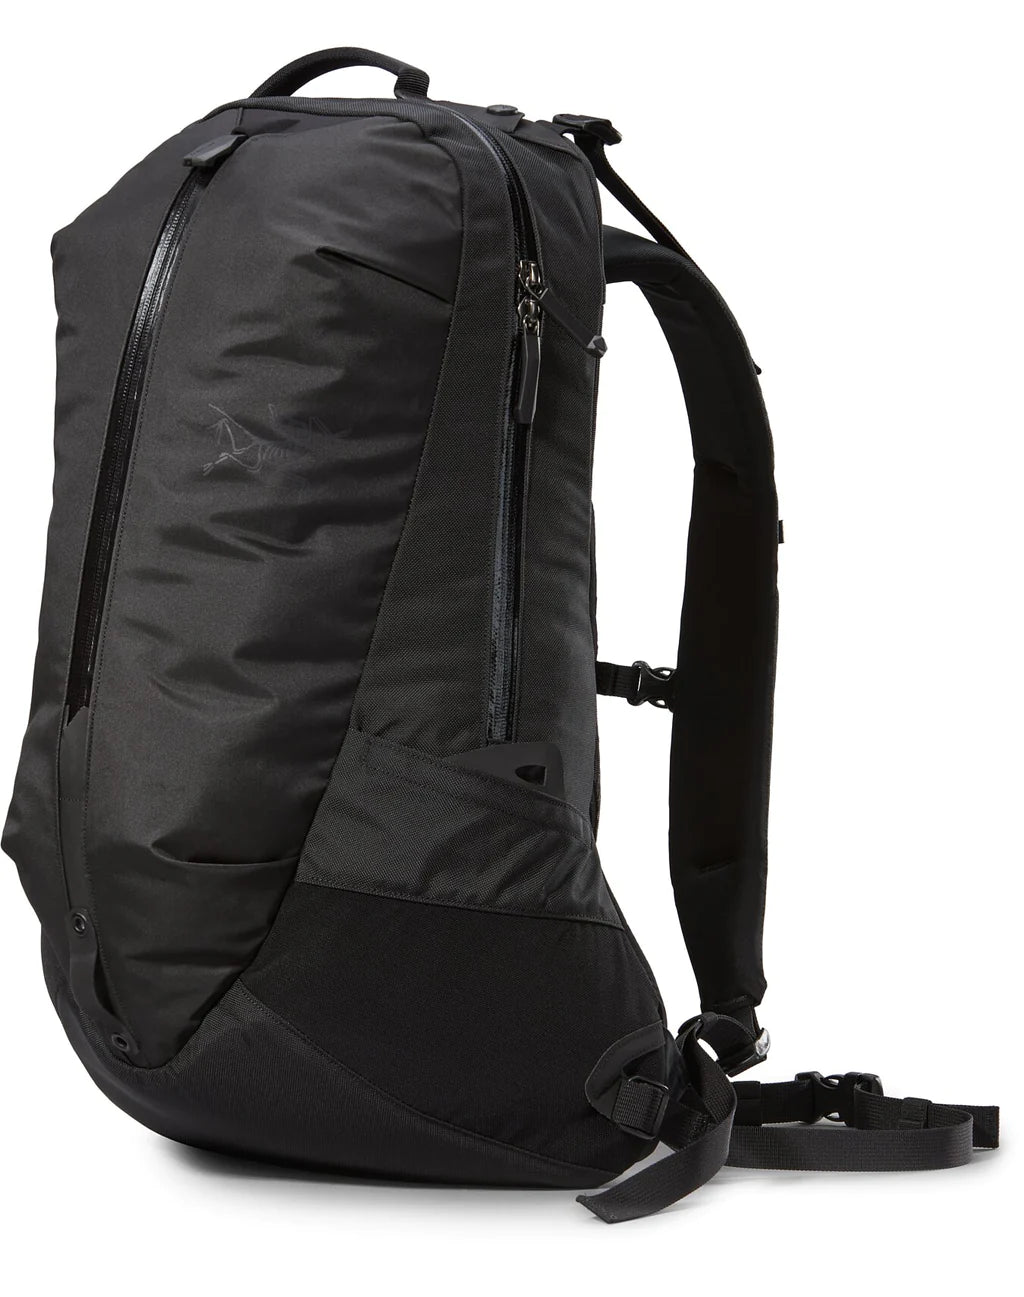 【NEW】Arro 22 Backpack